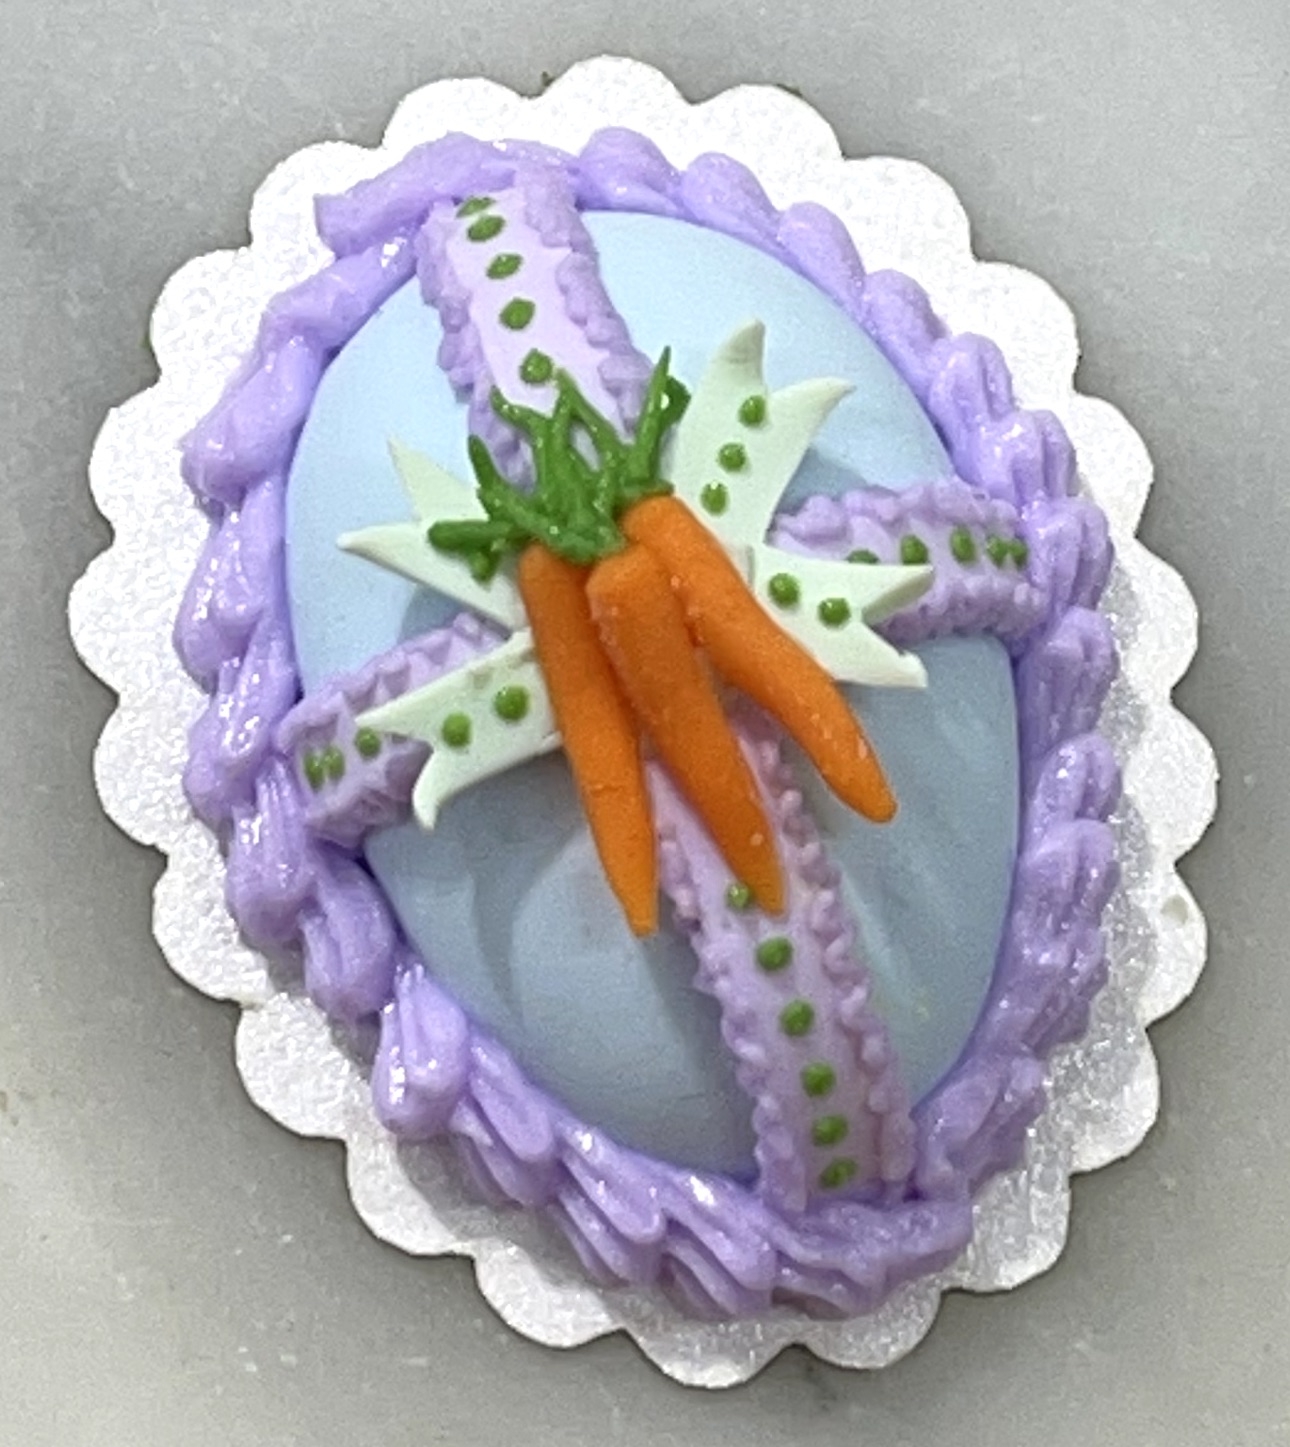 Vegan Carrot Cake Cupcakes - ShortGirlTallOrder